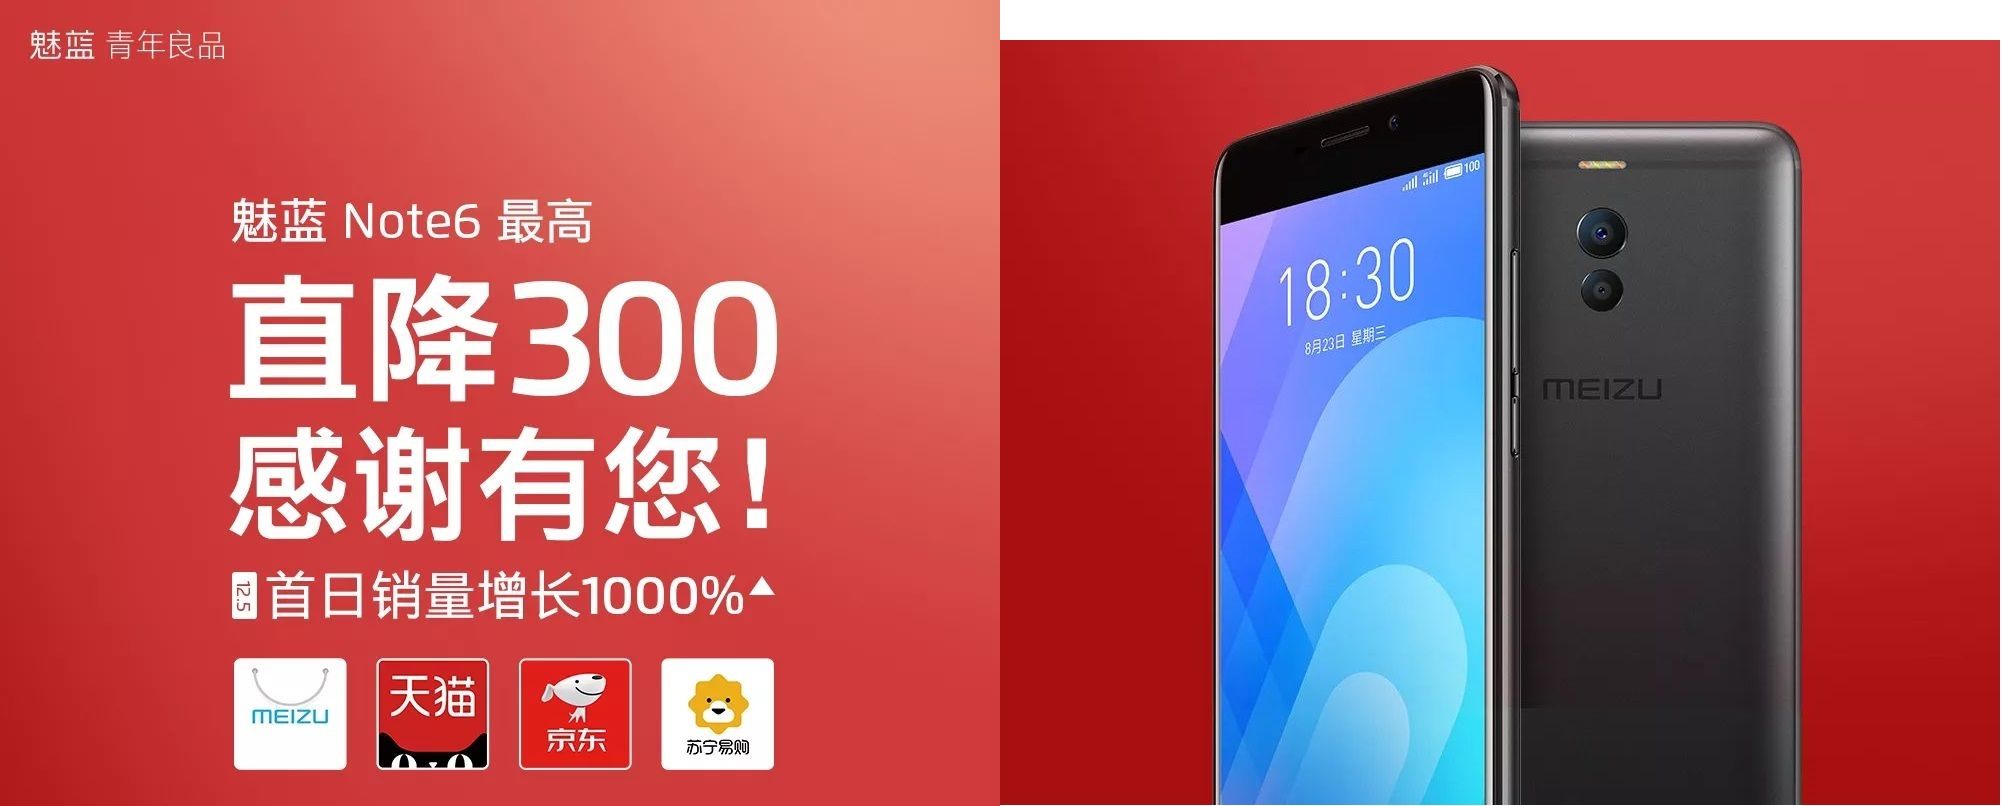 Meizu M6 Noteを最大300元値下げした12月5日は10倍の販売台数に